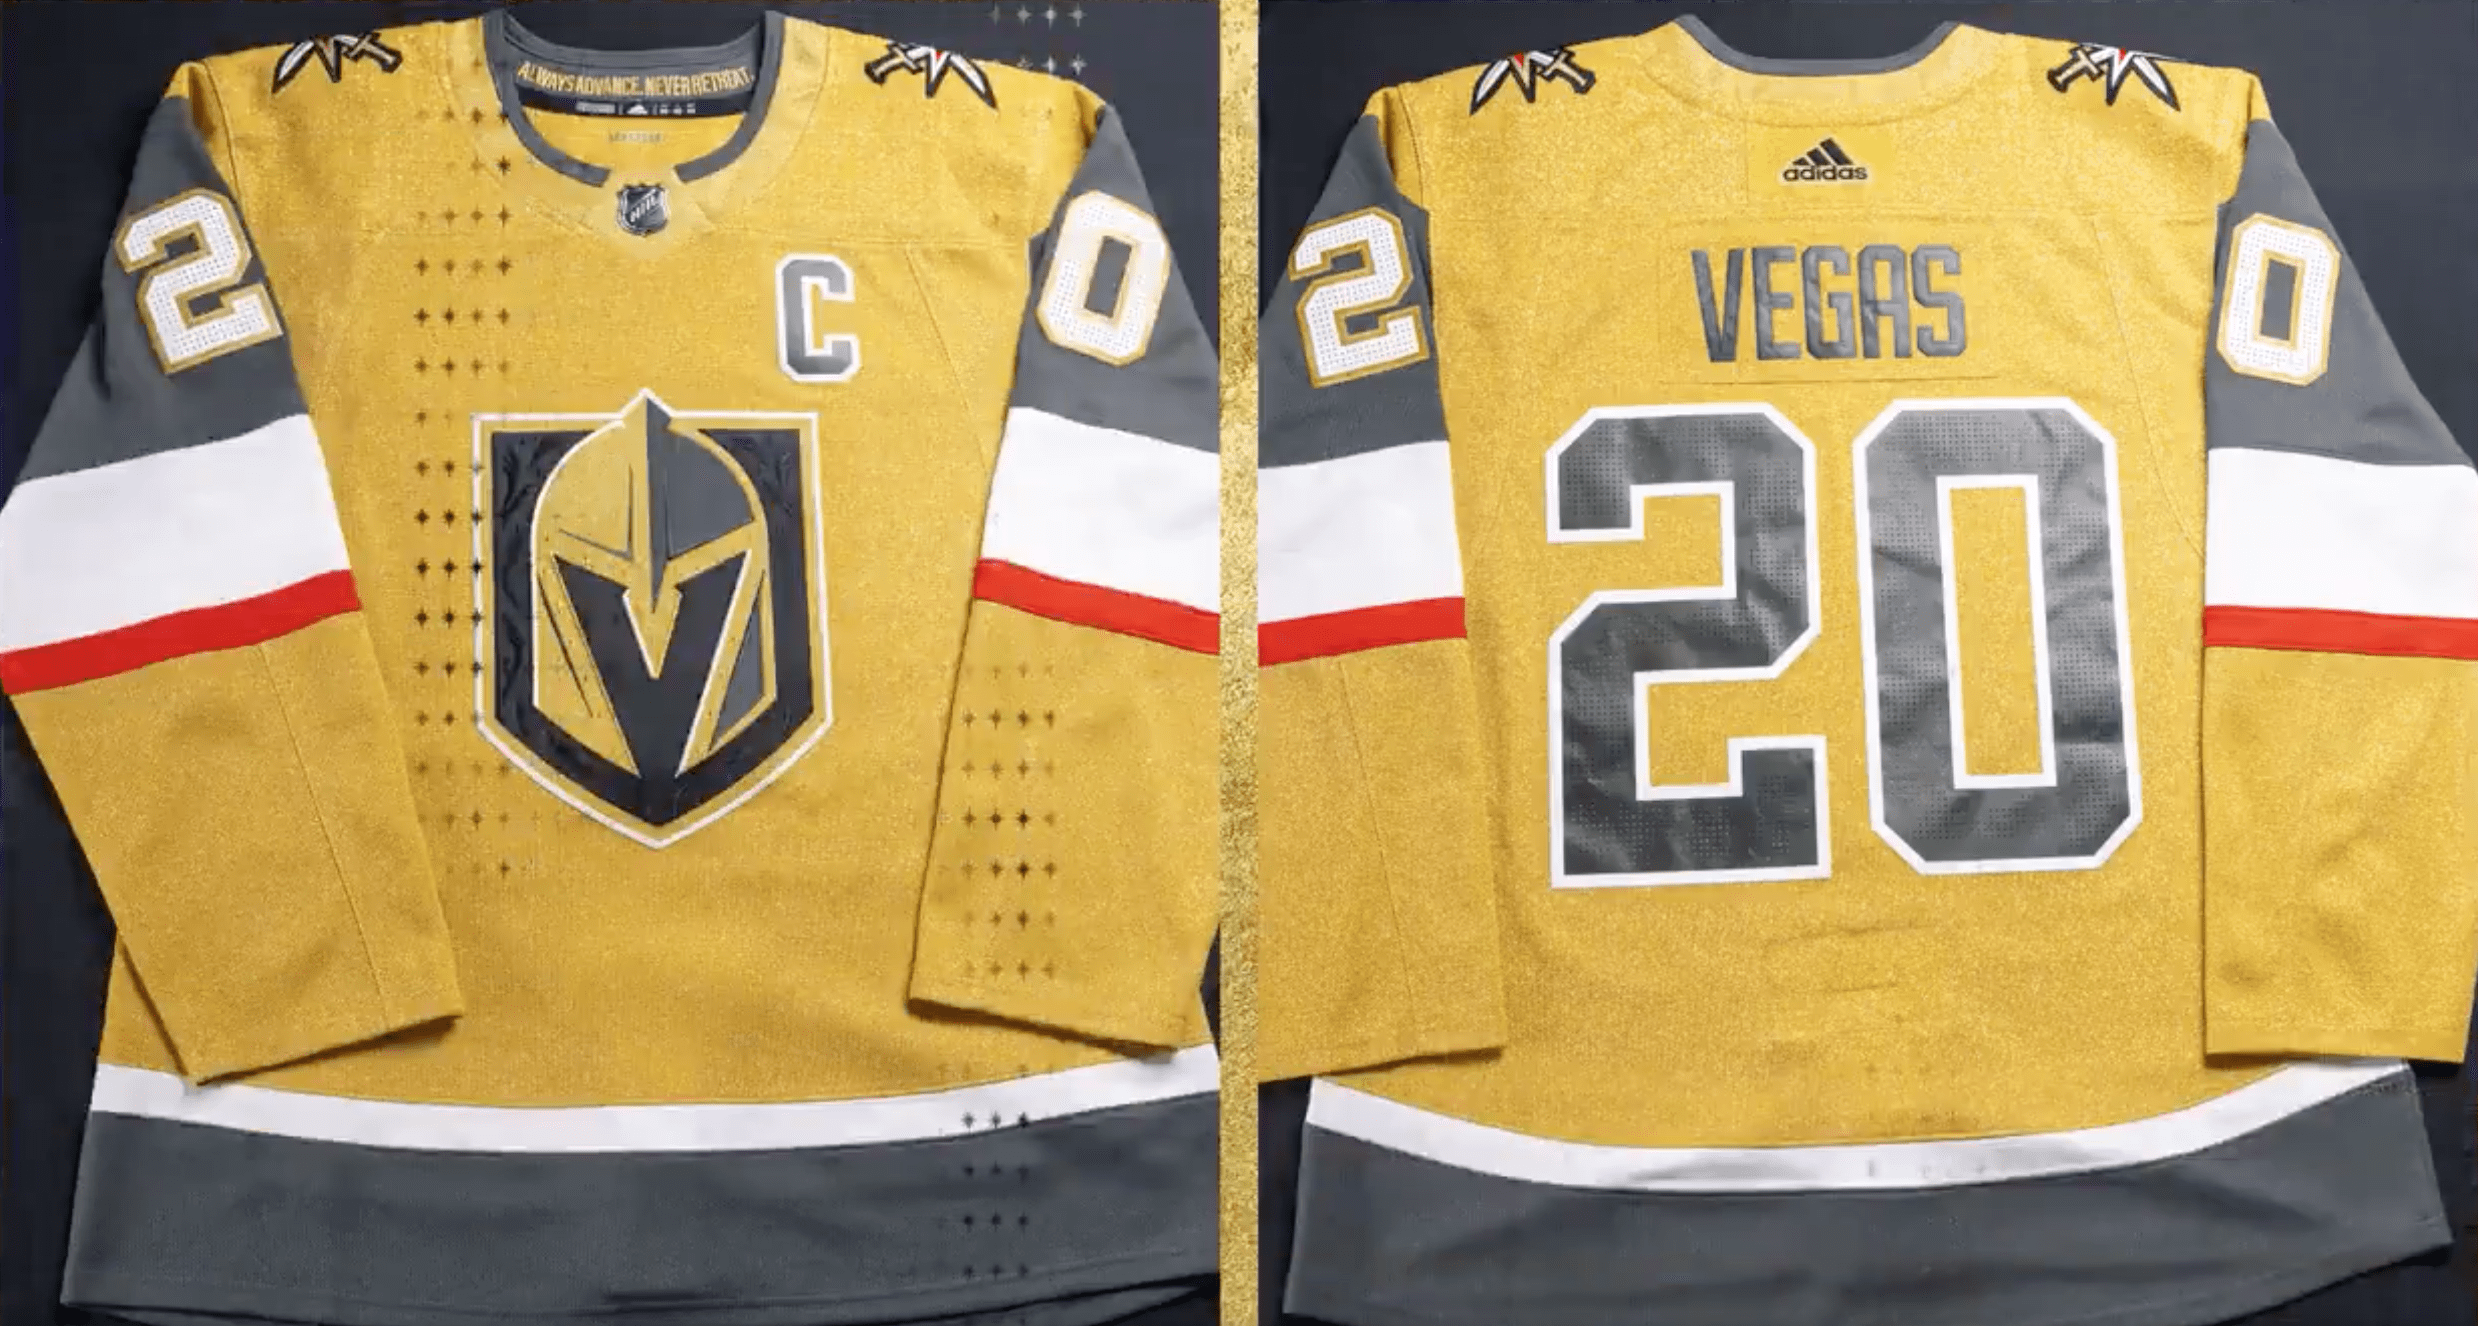 Vegas Golden Knights Light Uniform - National Hockey League (NHL